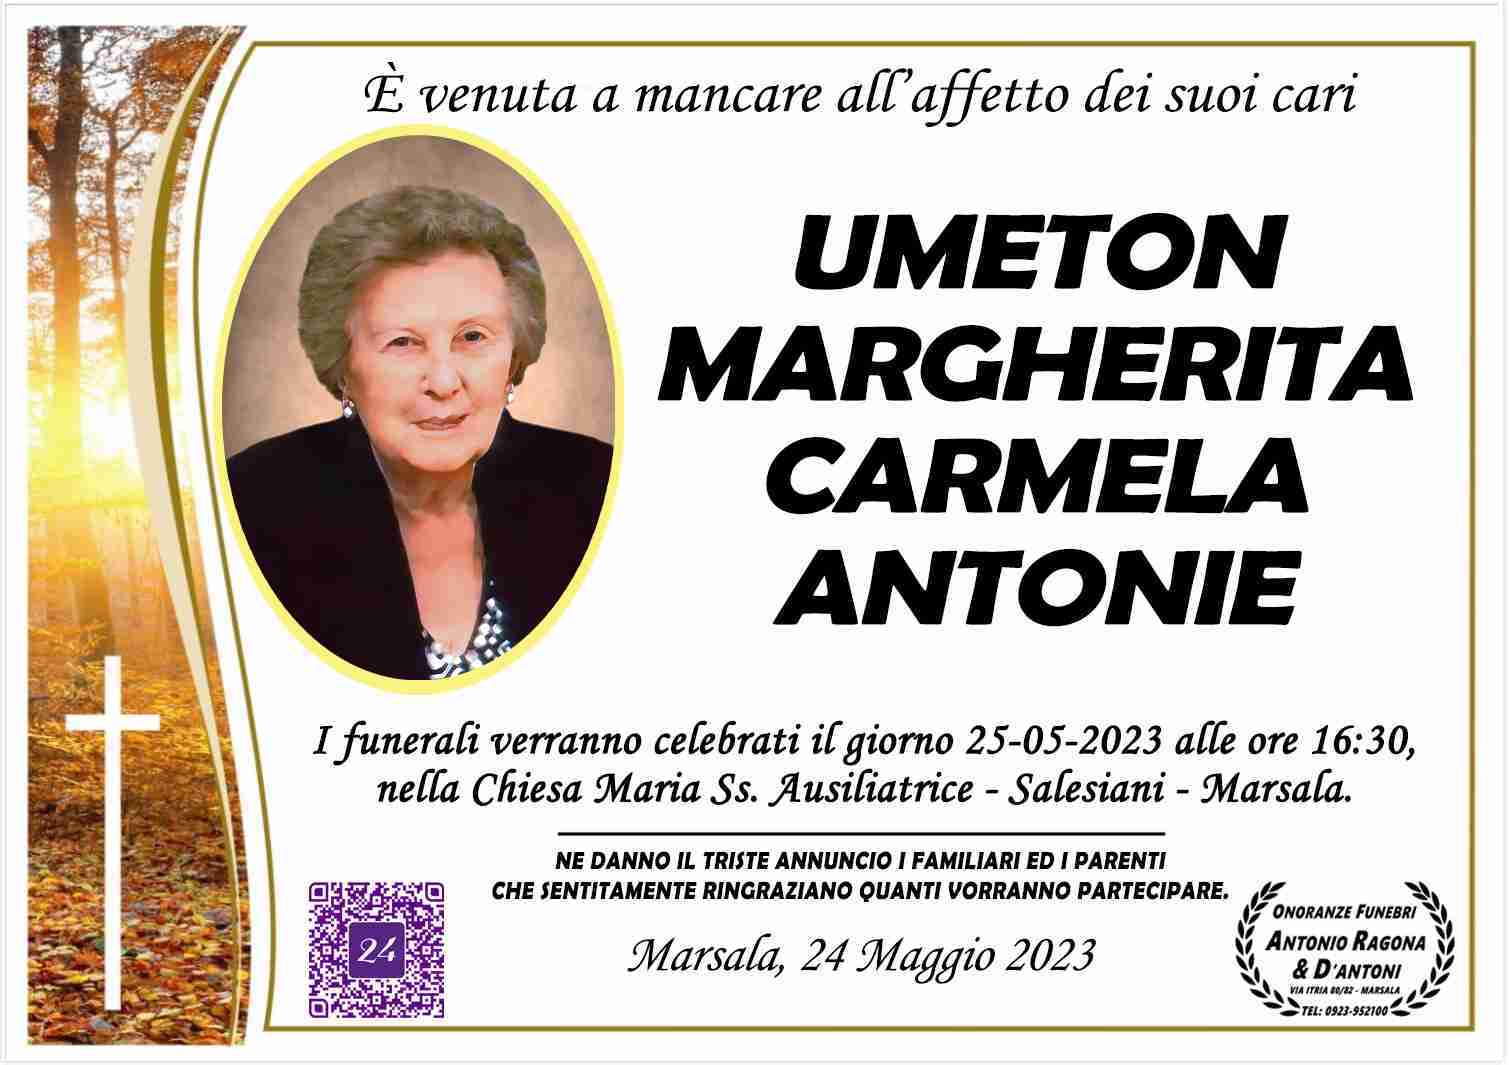 Margherita Carmela Antonie Umeton